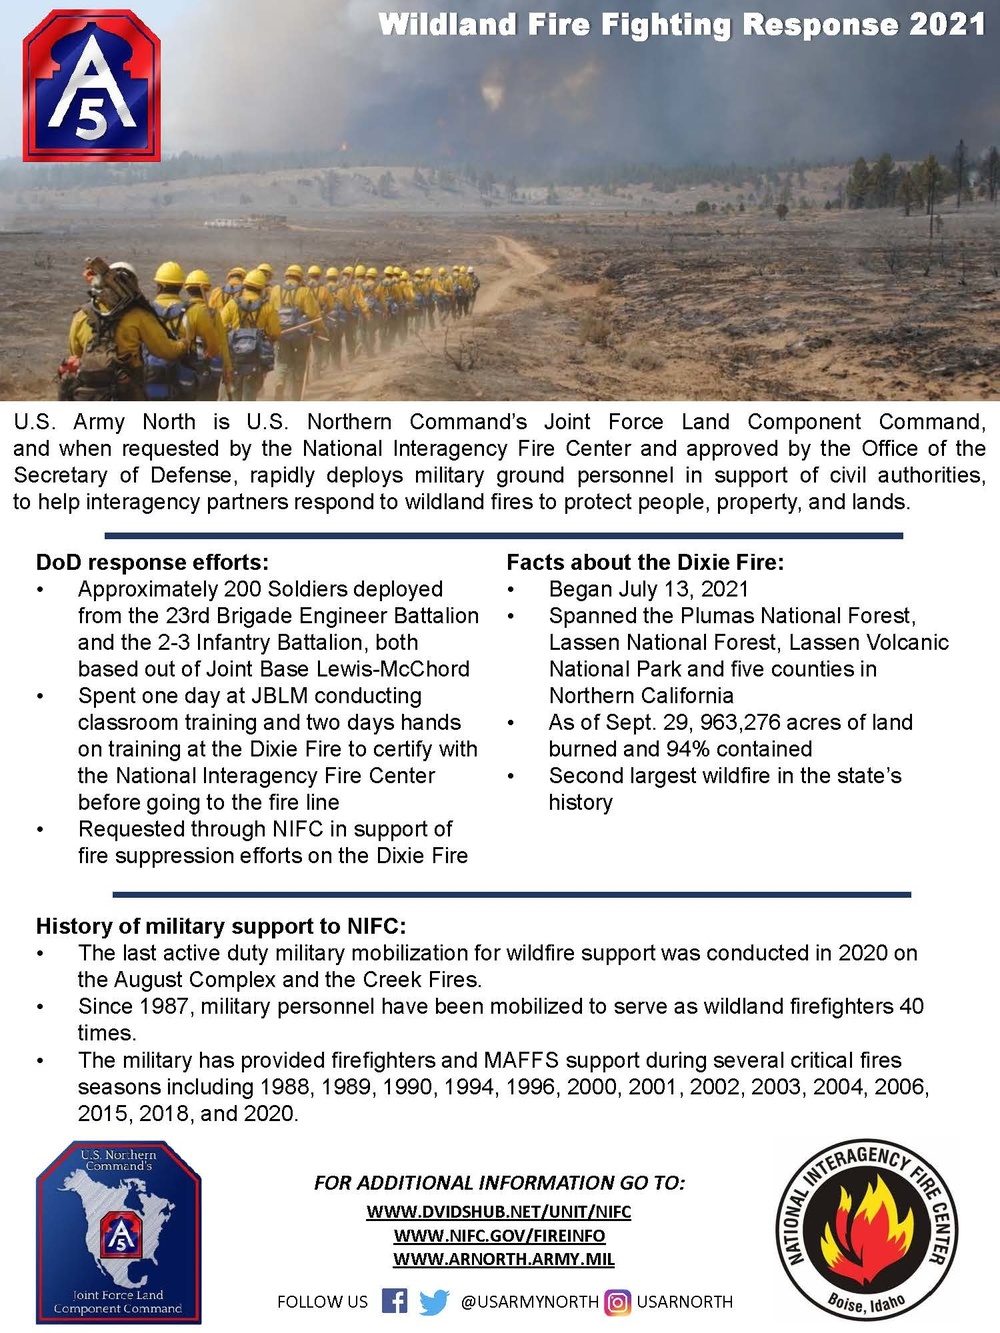 Wildland Fire Fighting Response 2021 Fact Sheet